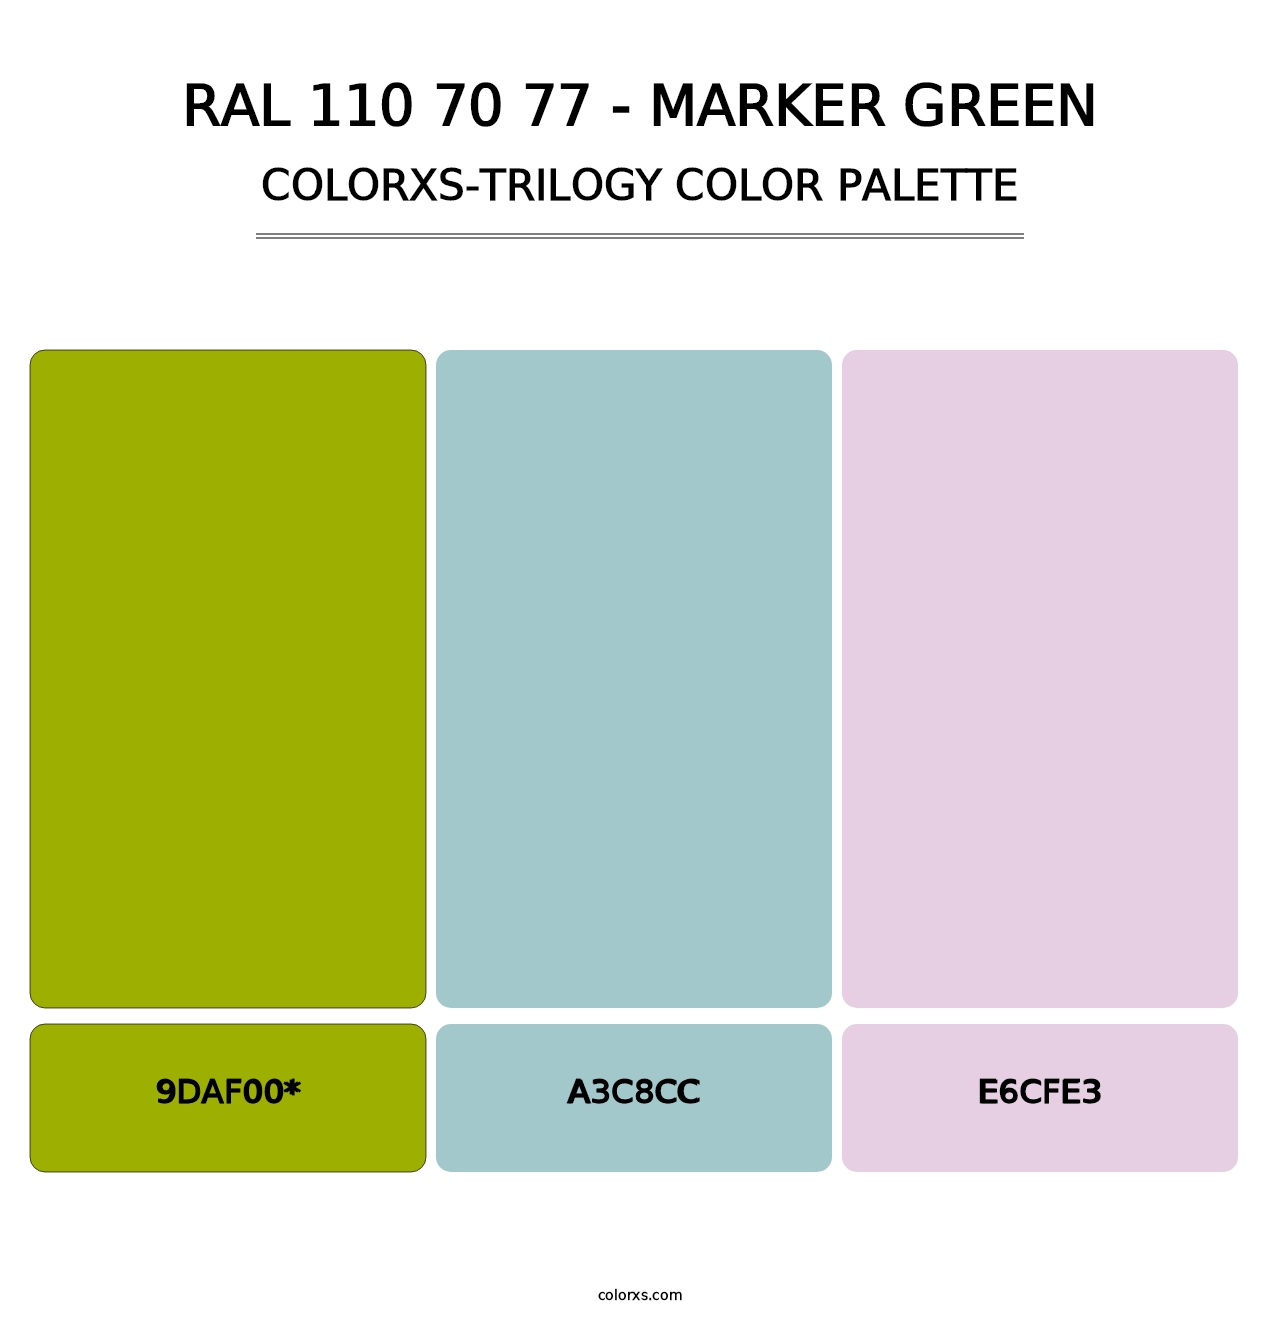 RAL 110 70 77 - Marker Green - Colorxs Trilogy Palette